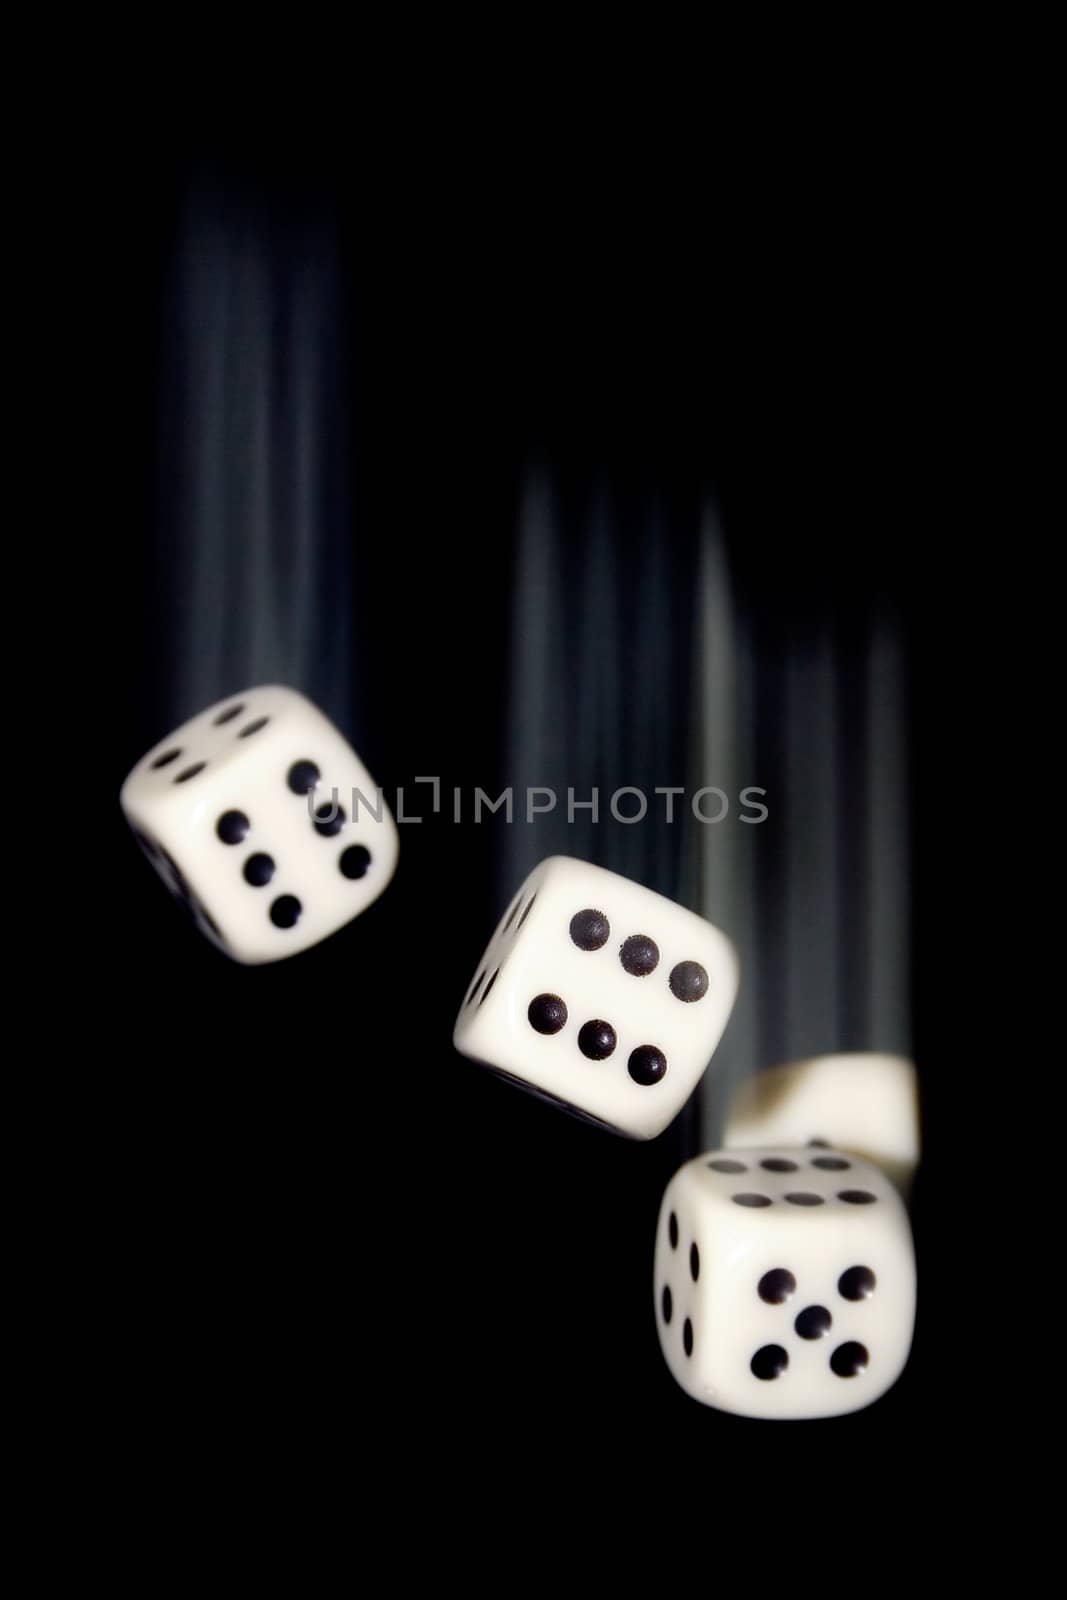 White dice falling. Motion blur. Black background.